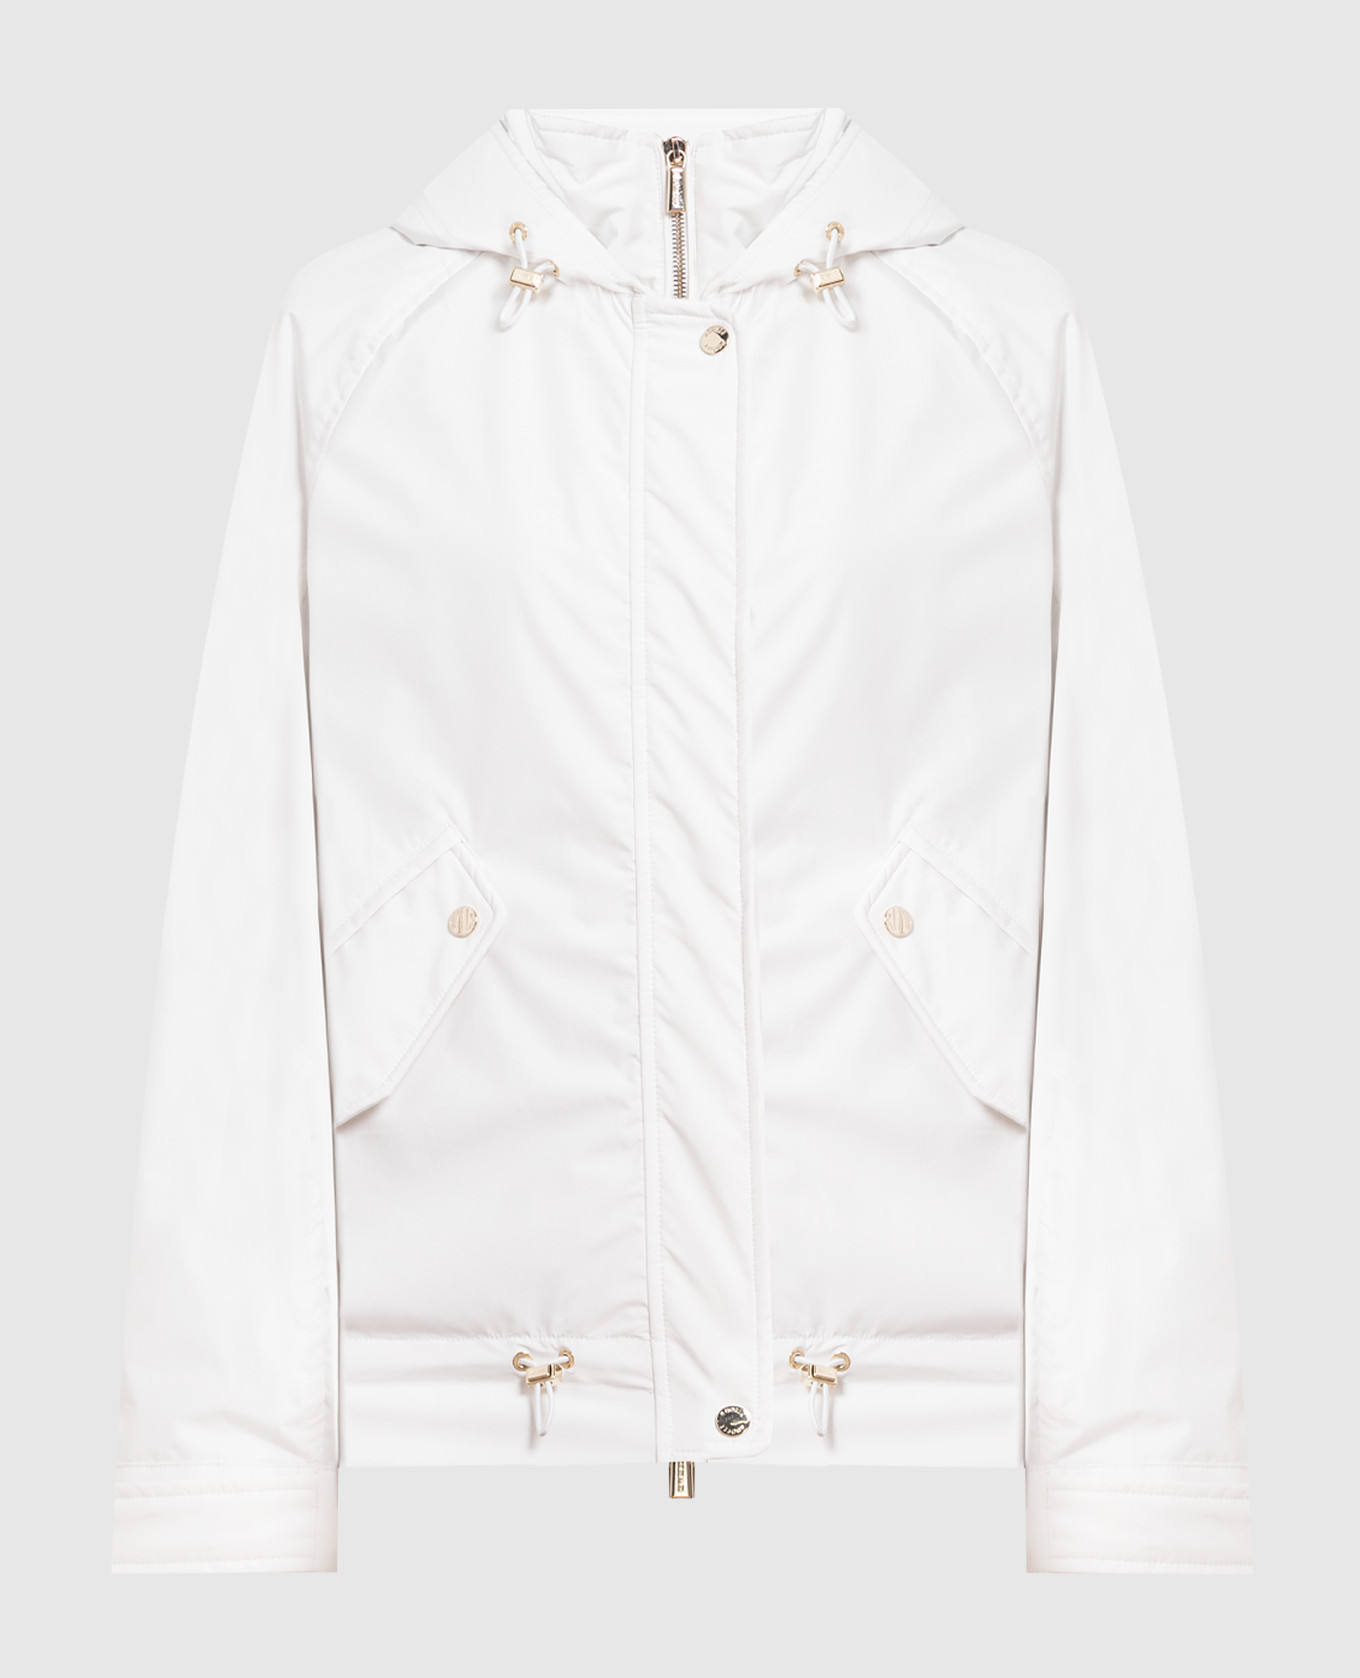 Jill's white jacket